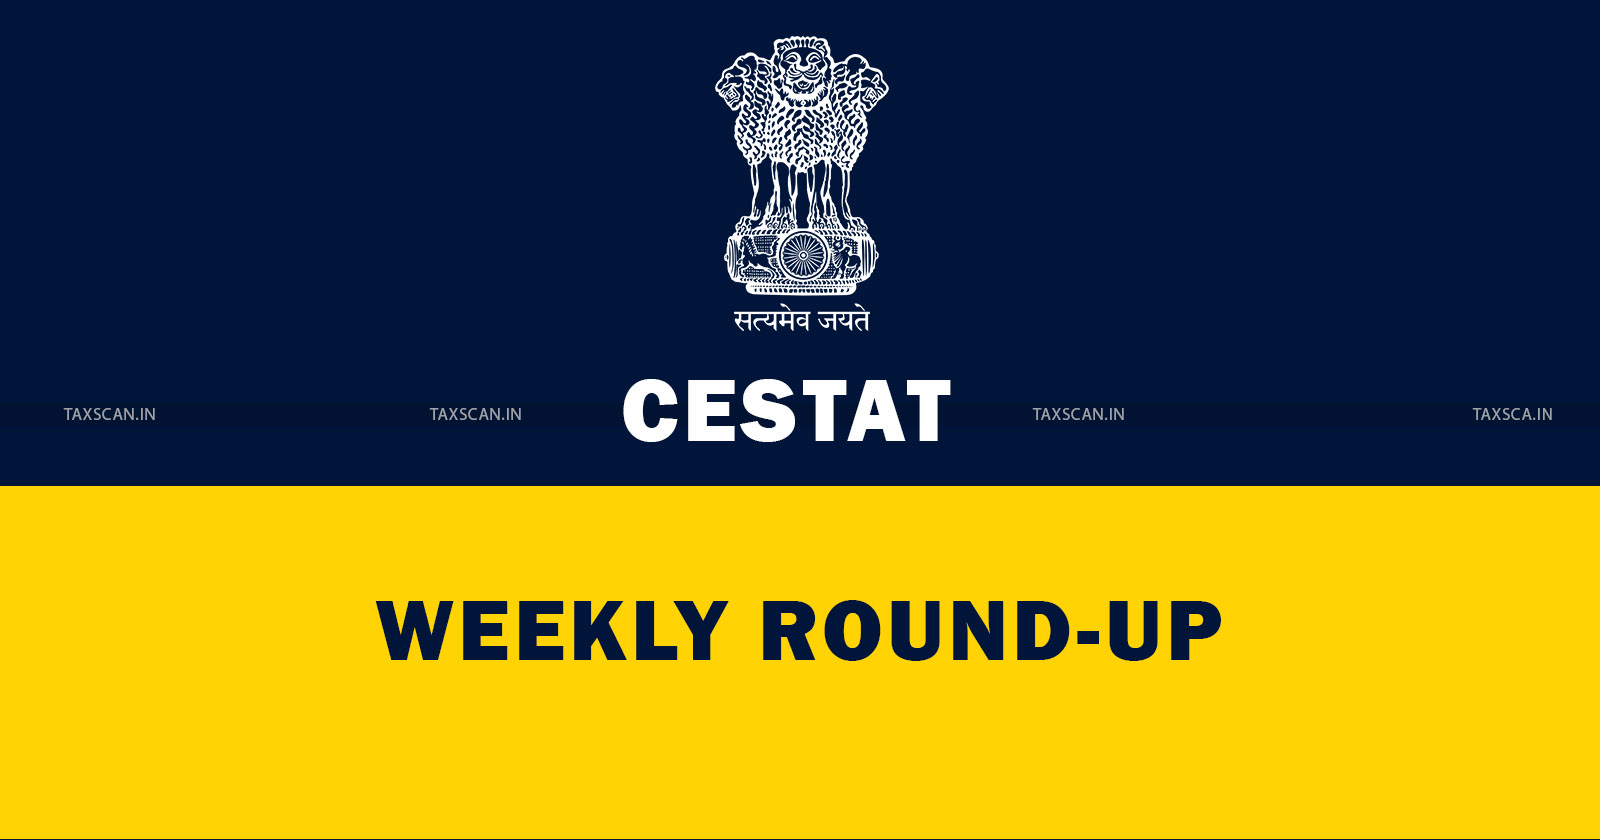 CESTAT - CESTAT news - CESTAT news roundup - Customs updates - Excise - Service tax - taxscan